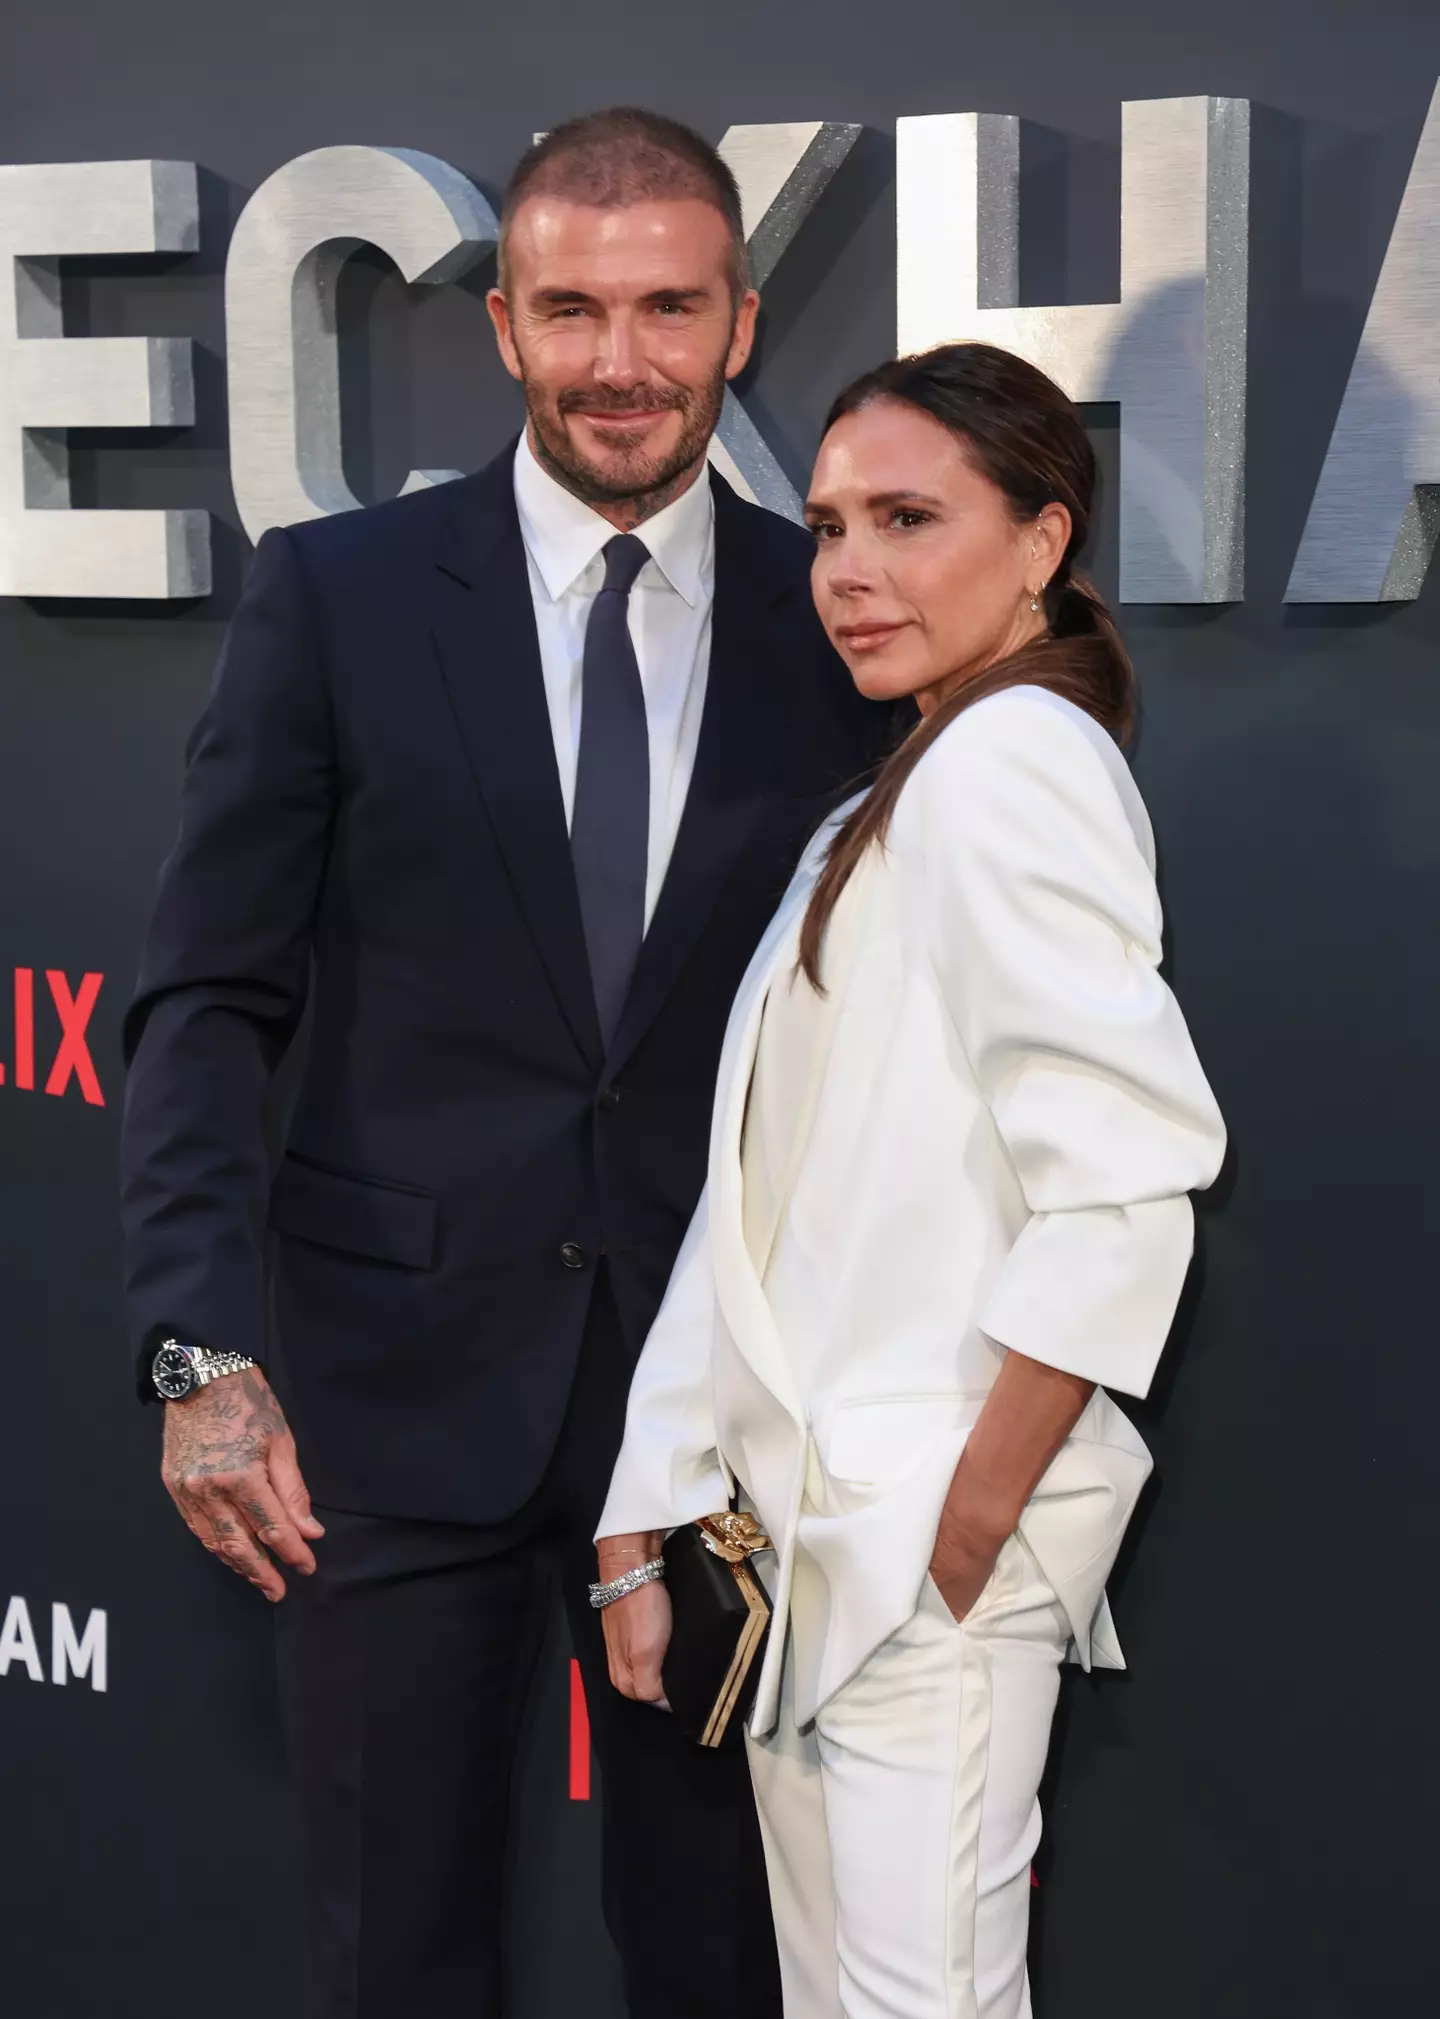 The new Beckham documentary landed on Netflix last week.